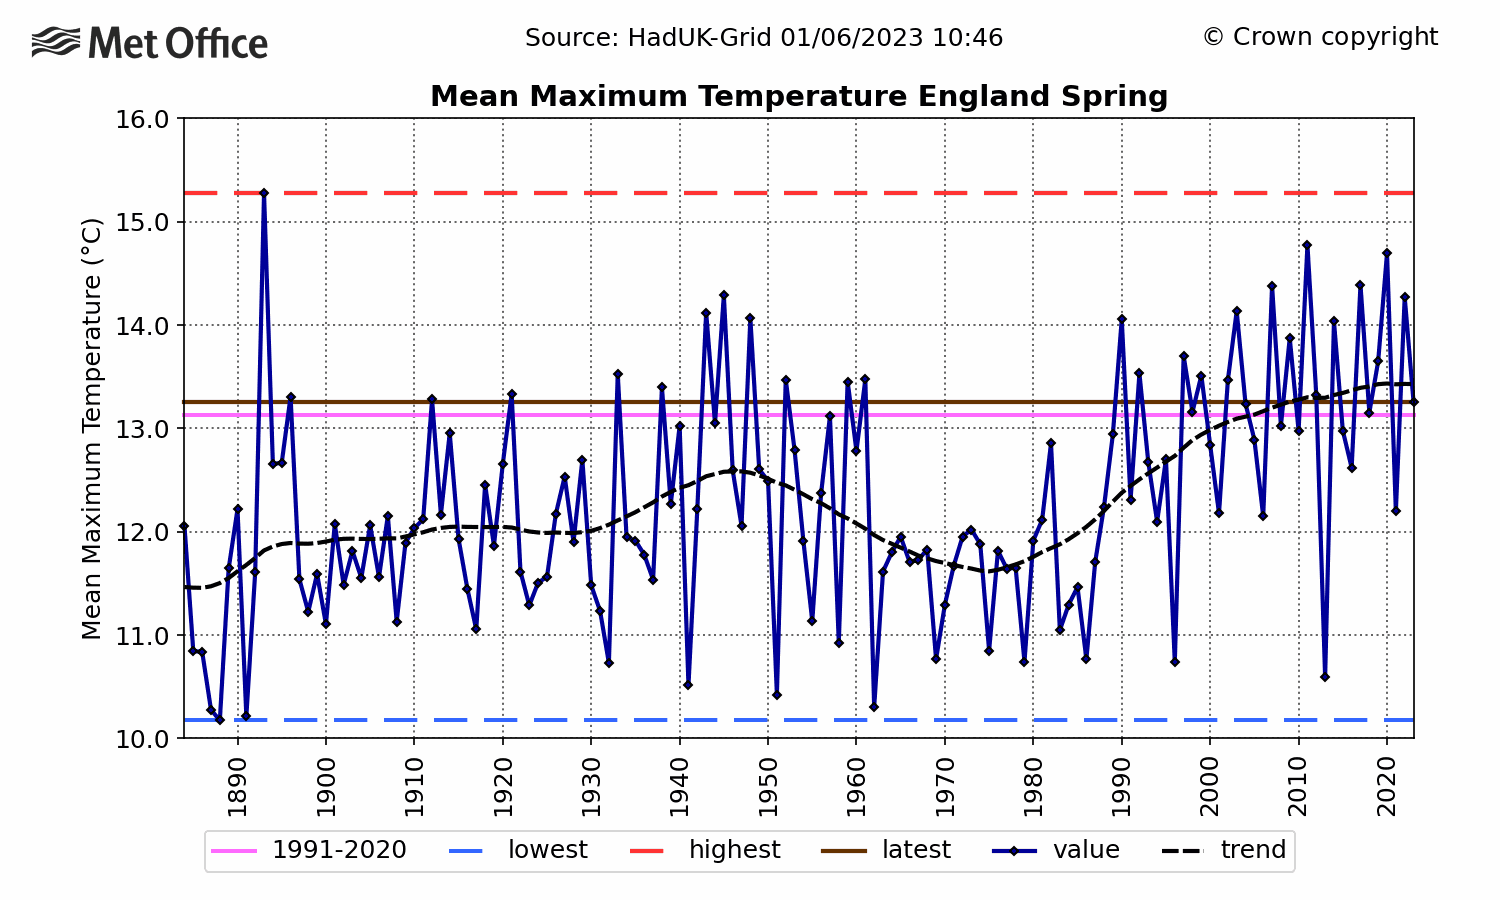 England Mean daily maximum temp - Spring